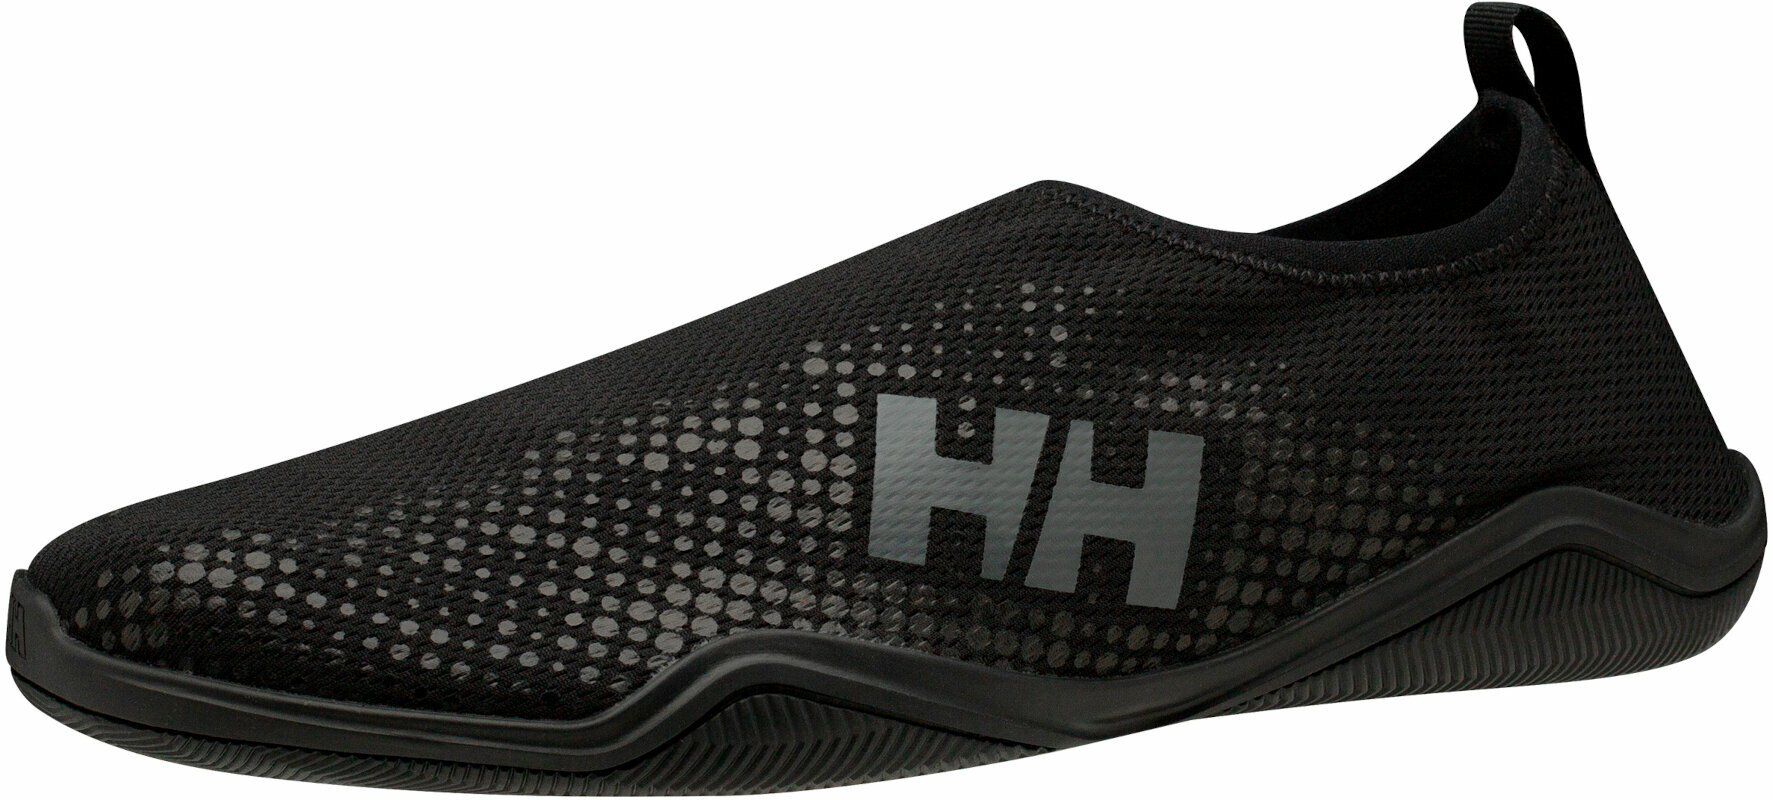 Mens Sailing Shoes Helly Hansen Men's Crest Watermoc Black/Charcoal 41